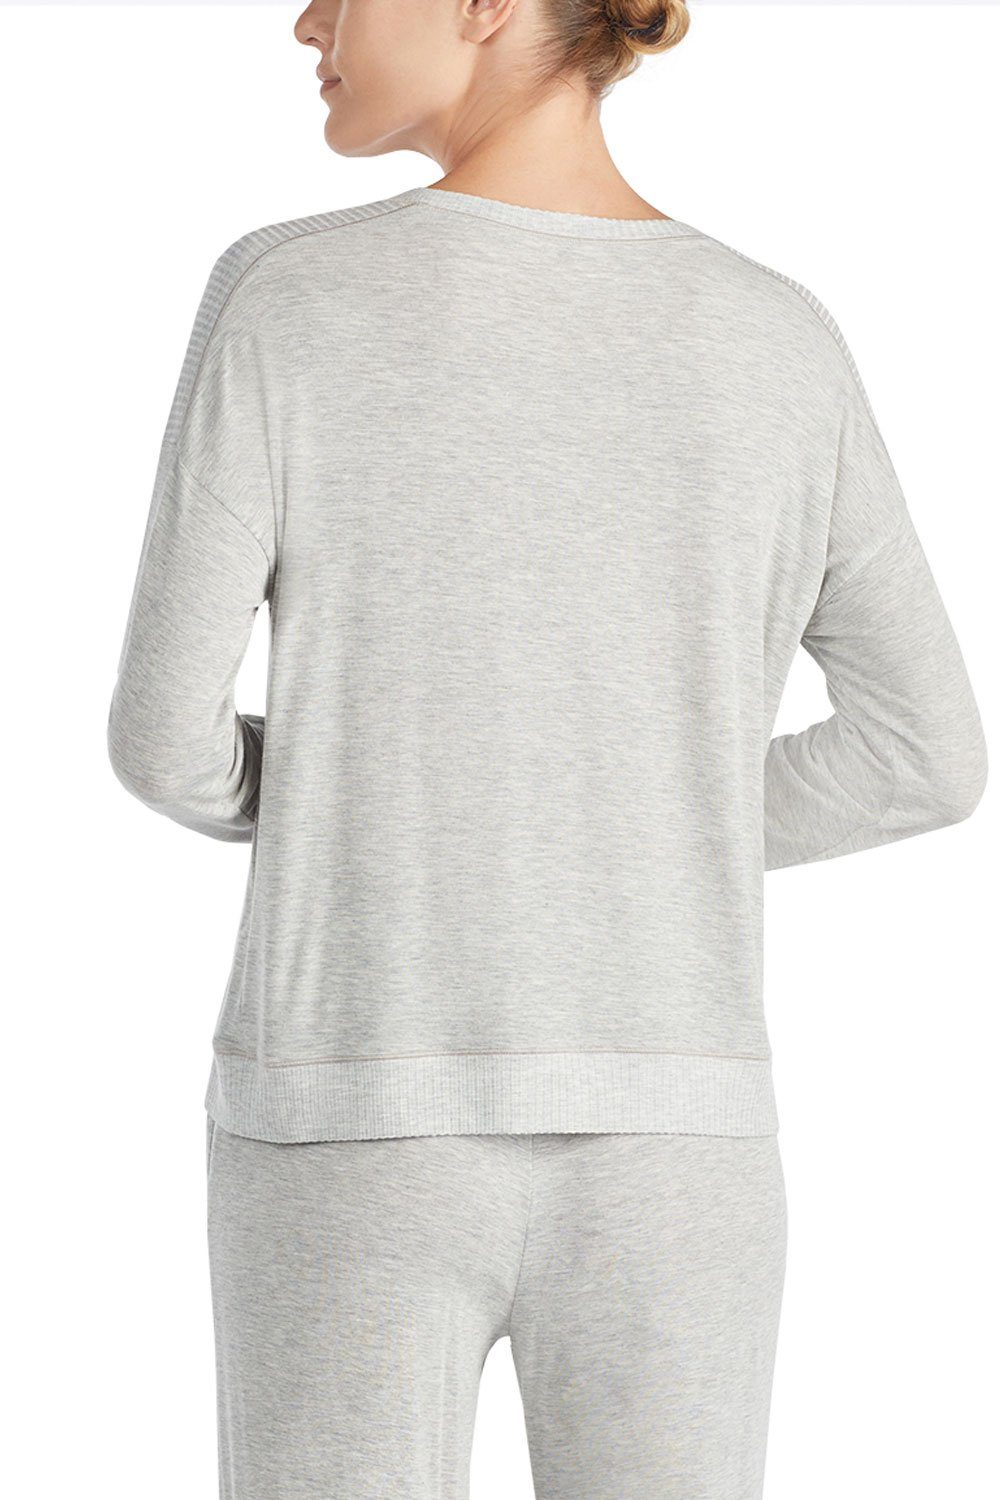 DKNY Sleepshirt Top Essentials light grey YI3419330 heather